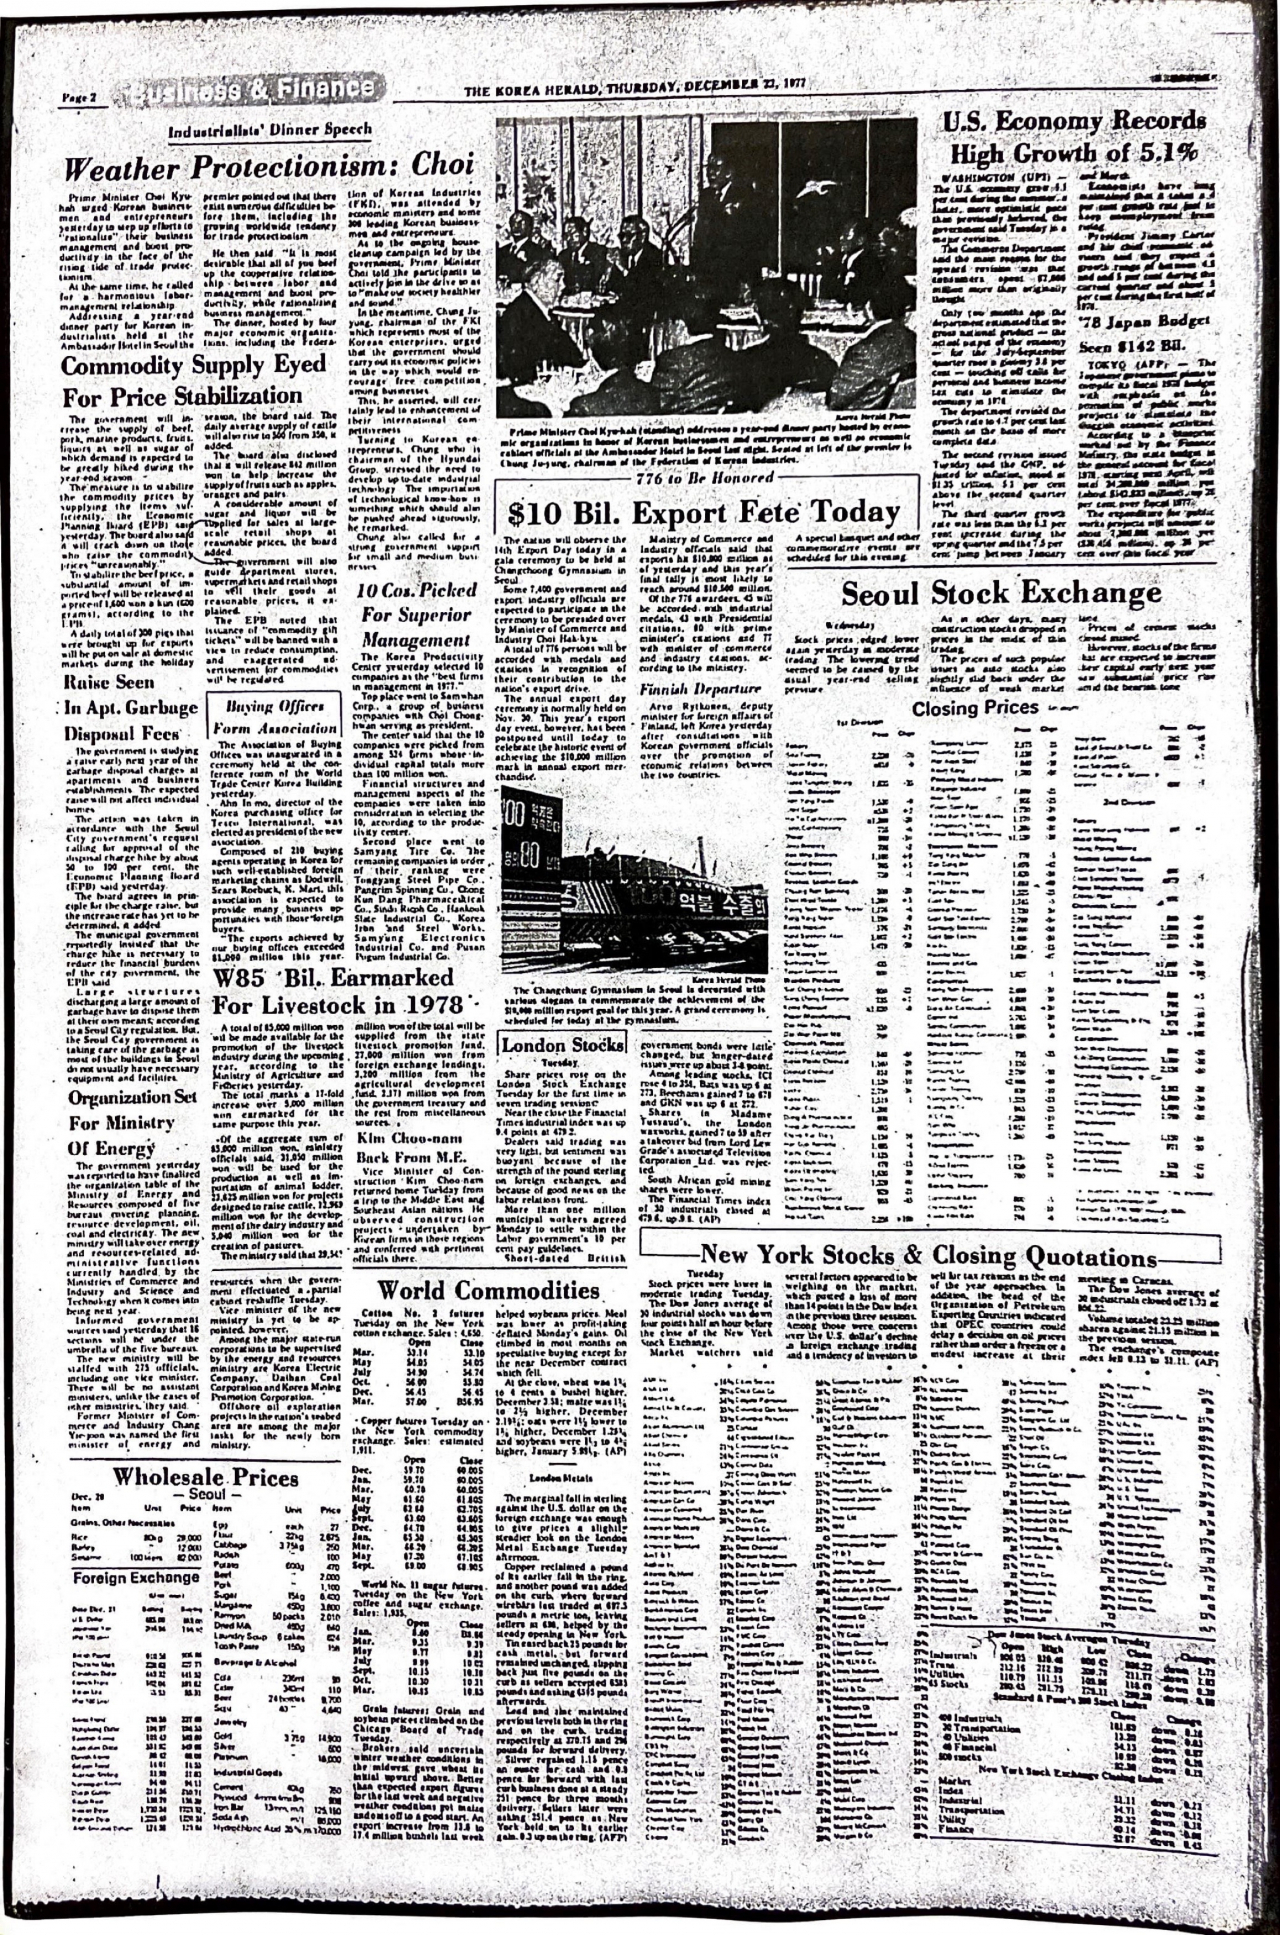 The Dec. 22, 1977 edition of The Korea Herald celebrates the 